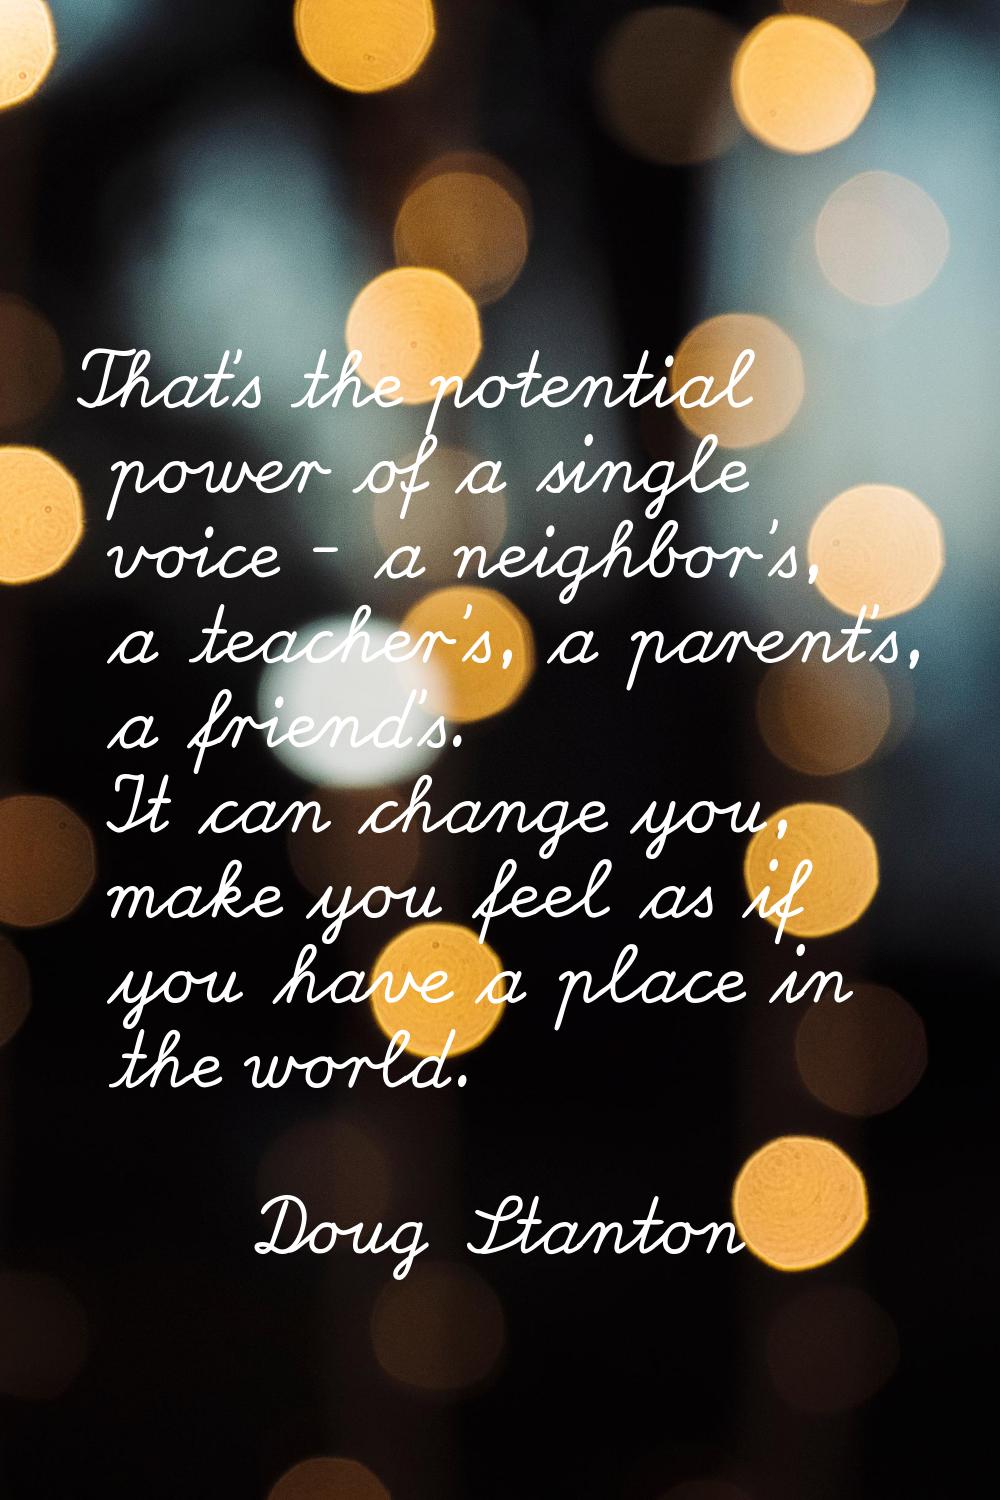 That's the potential power of a single voice - a neighbor's, a teacher's, a parent's, a friend's. I